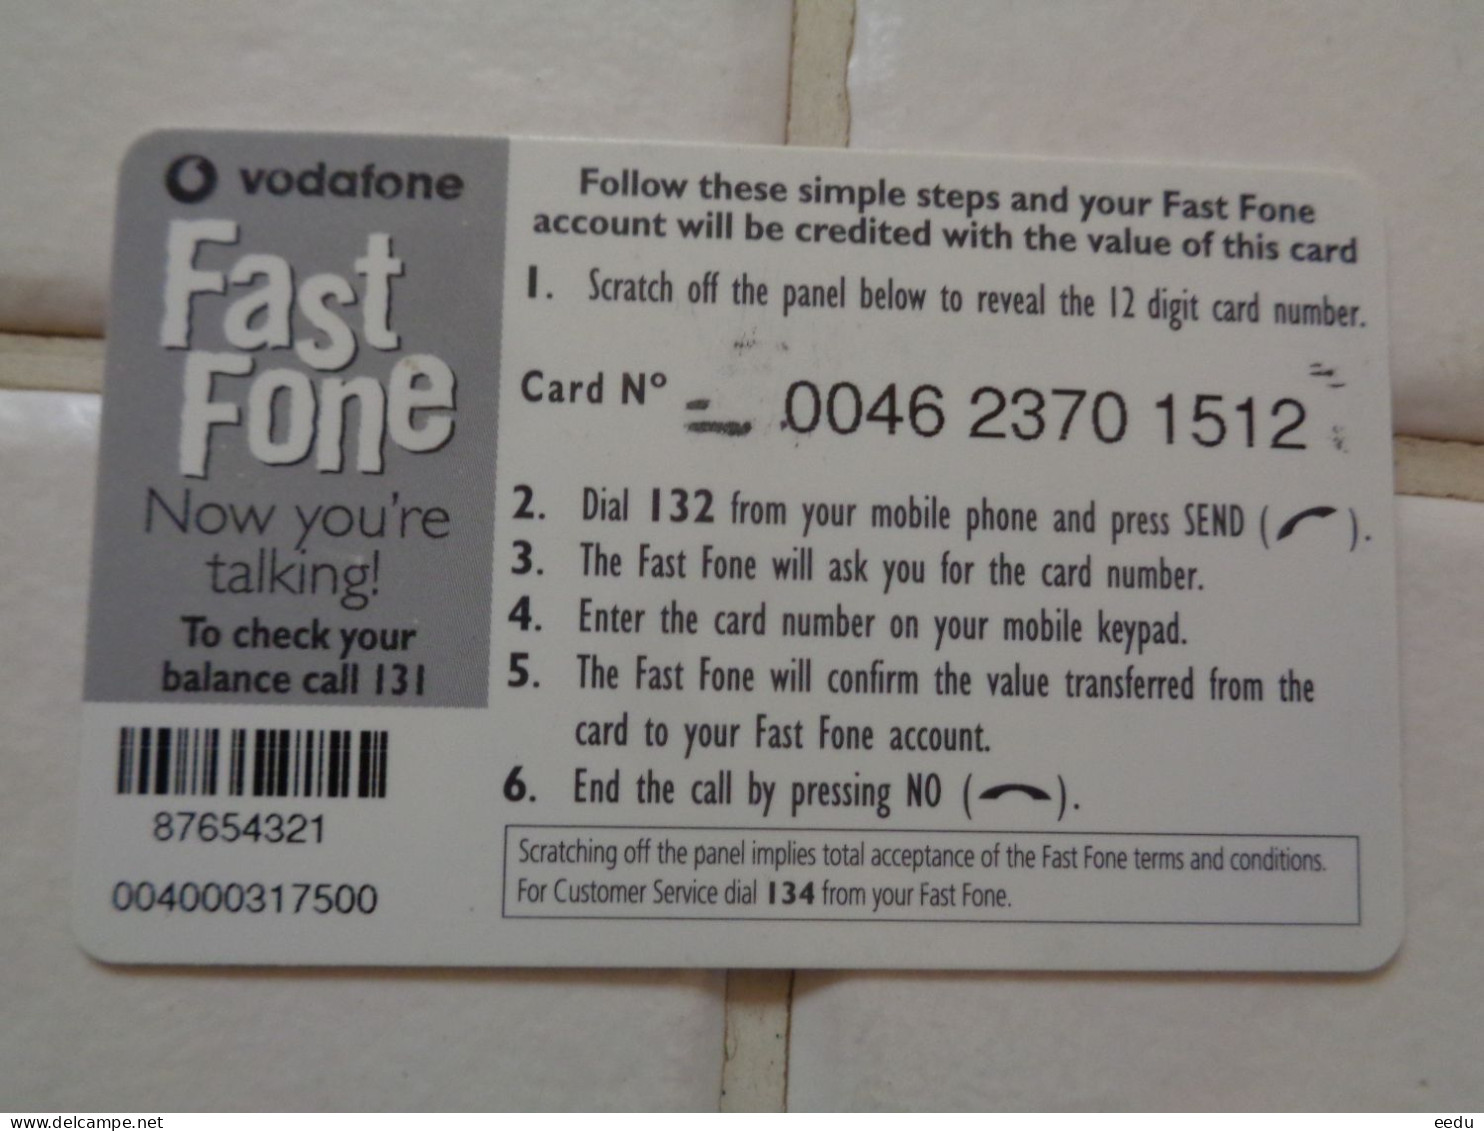 Fiji Phonecard - Fidschi